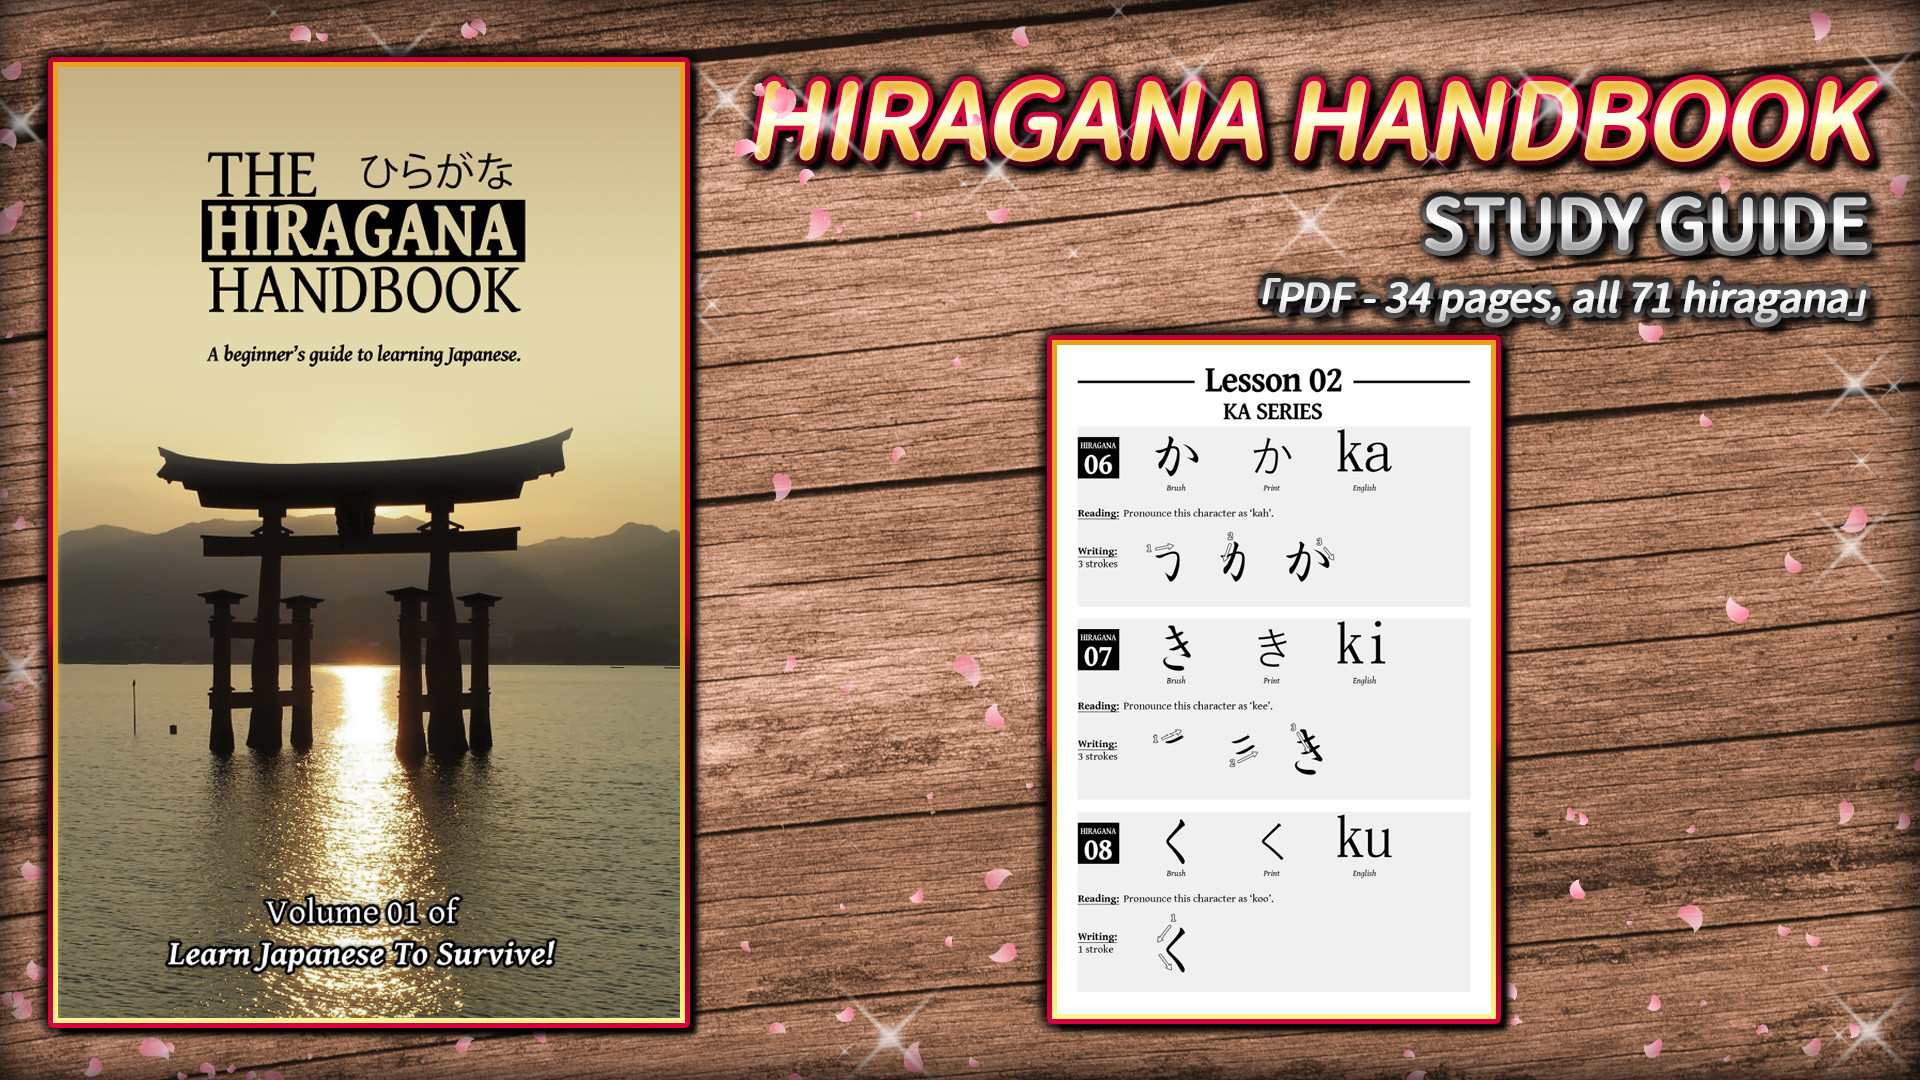 learn japanese to survive hiragana battle walkthrough